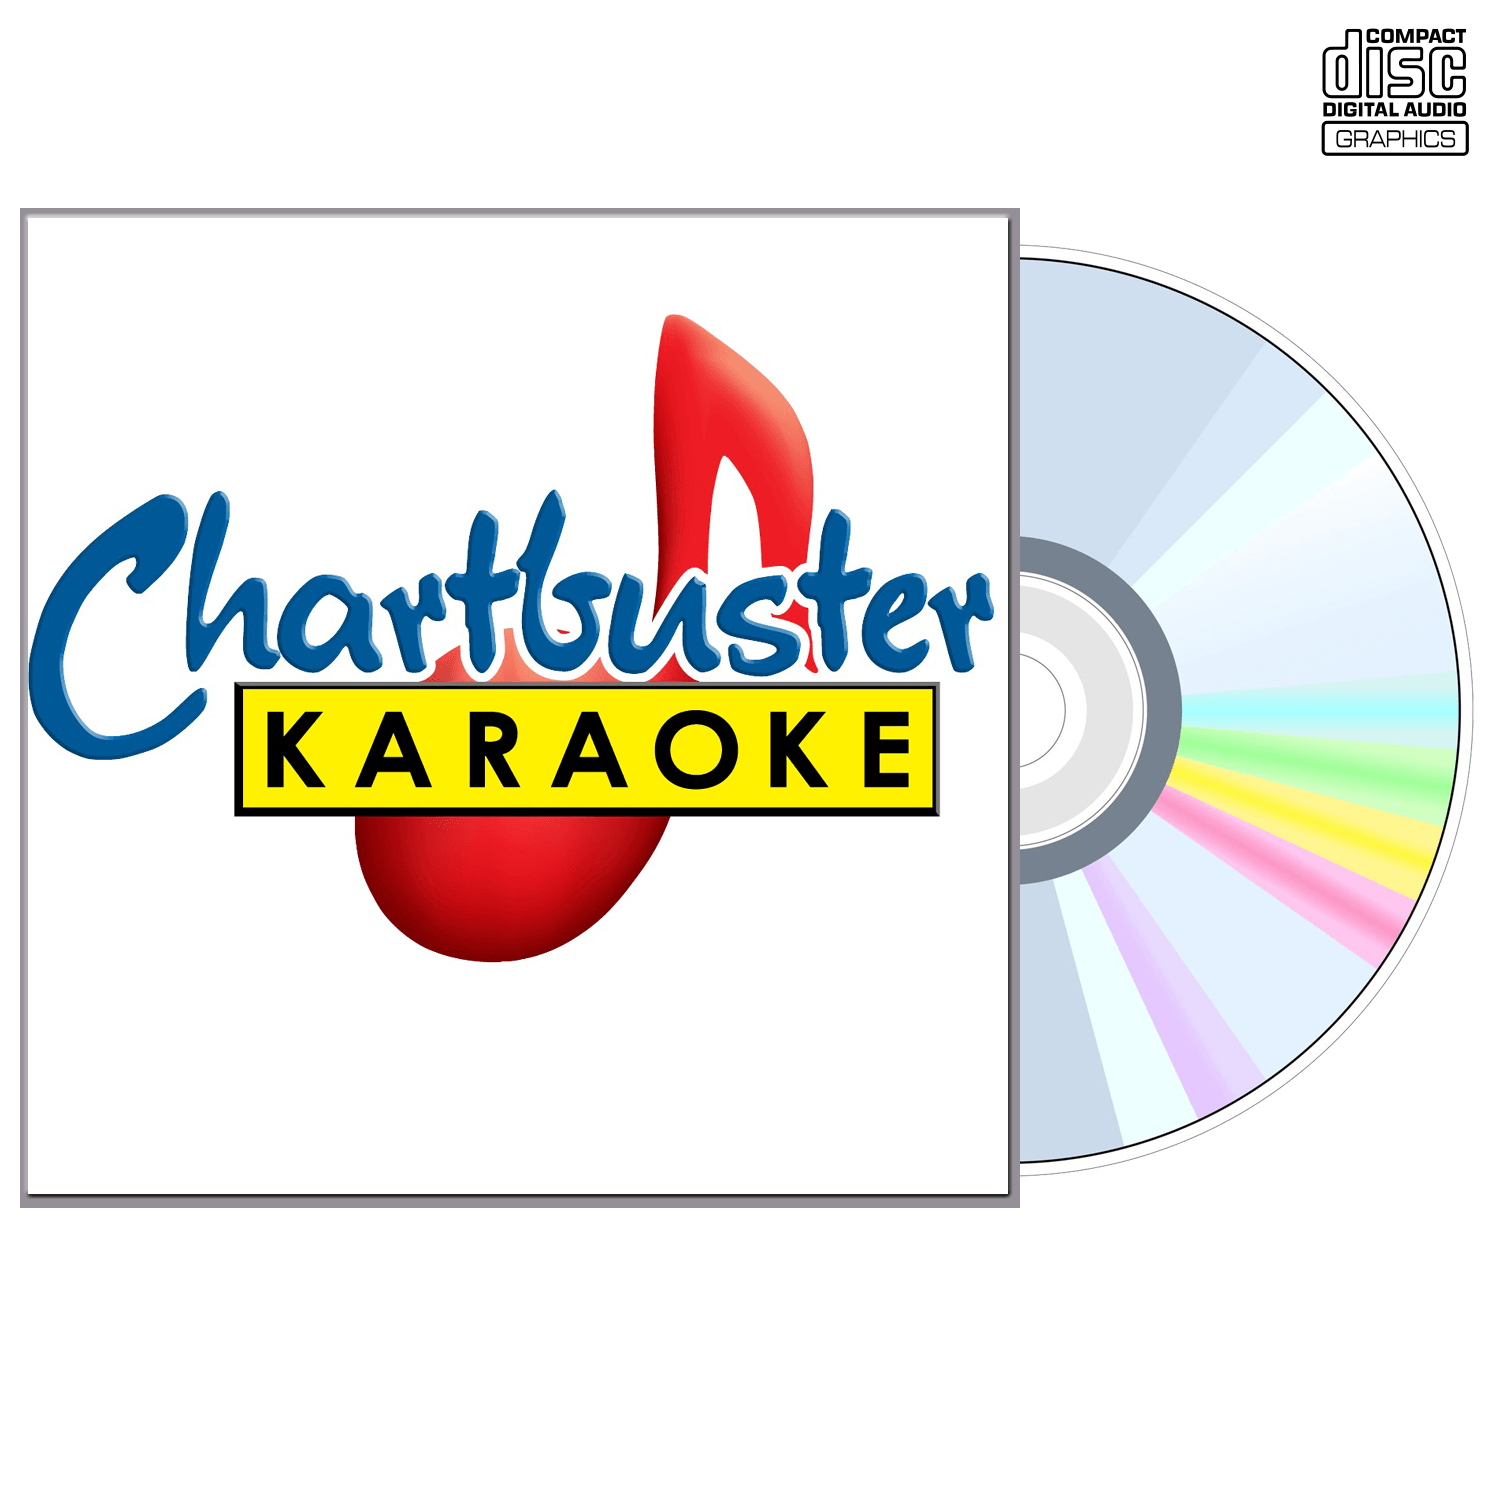 Best Of Steve Wariner - CD+G - Chartbuster Karaoke - Karaoke Home Entertainment